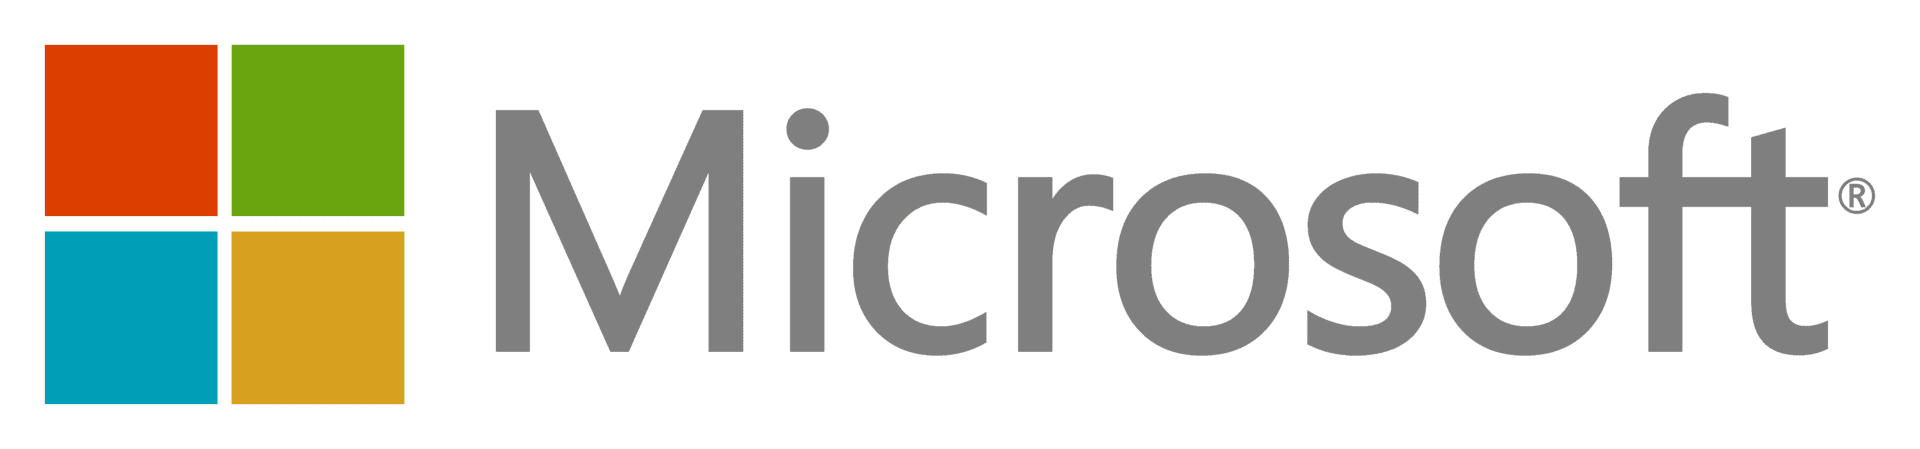 microsoft-logo-png-transparent-background-1